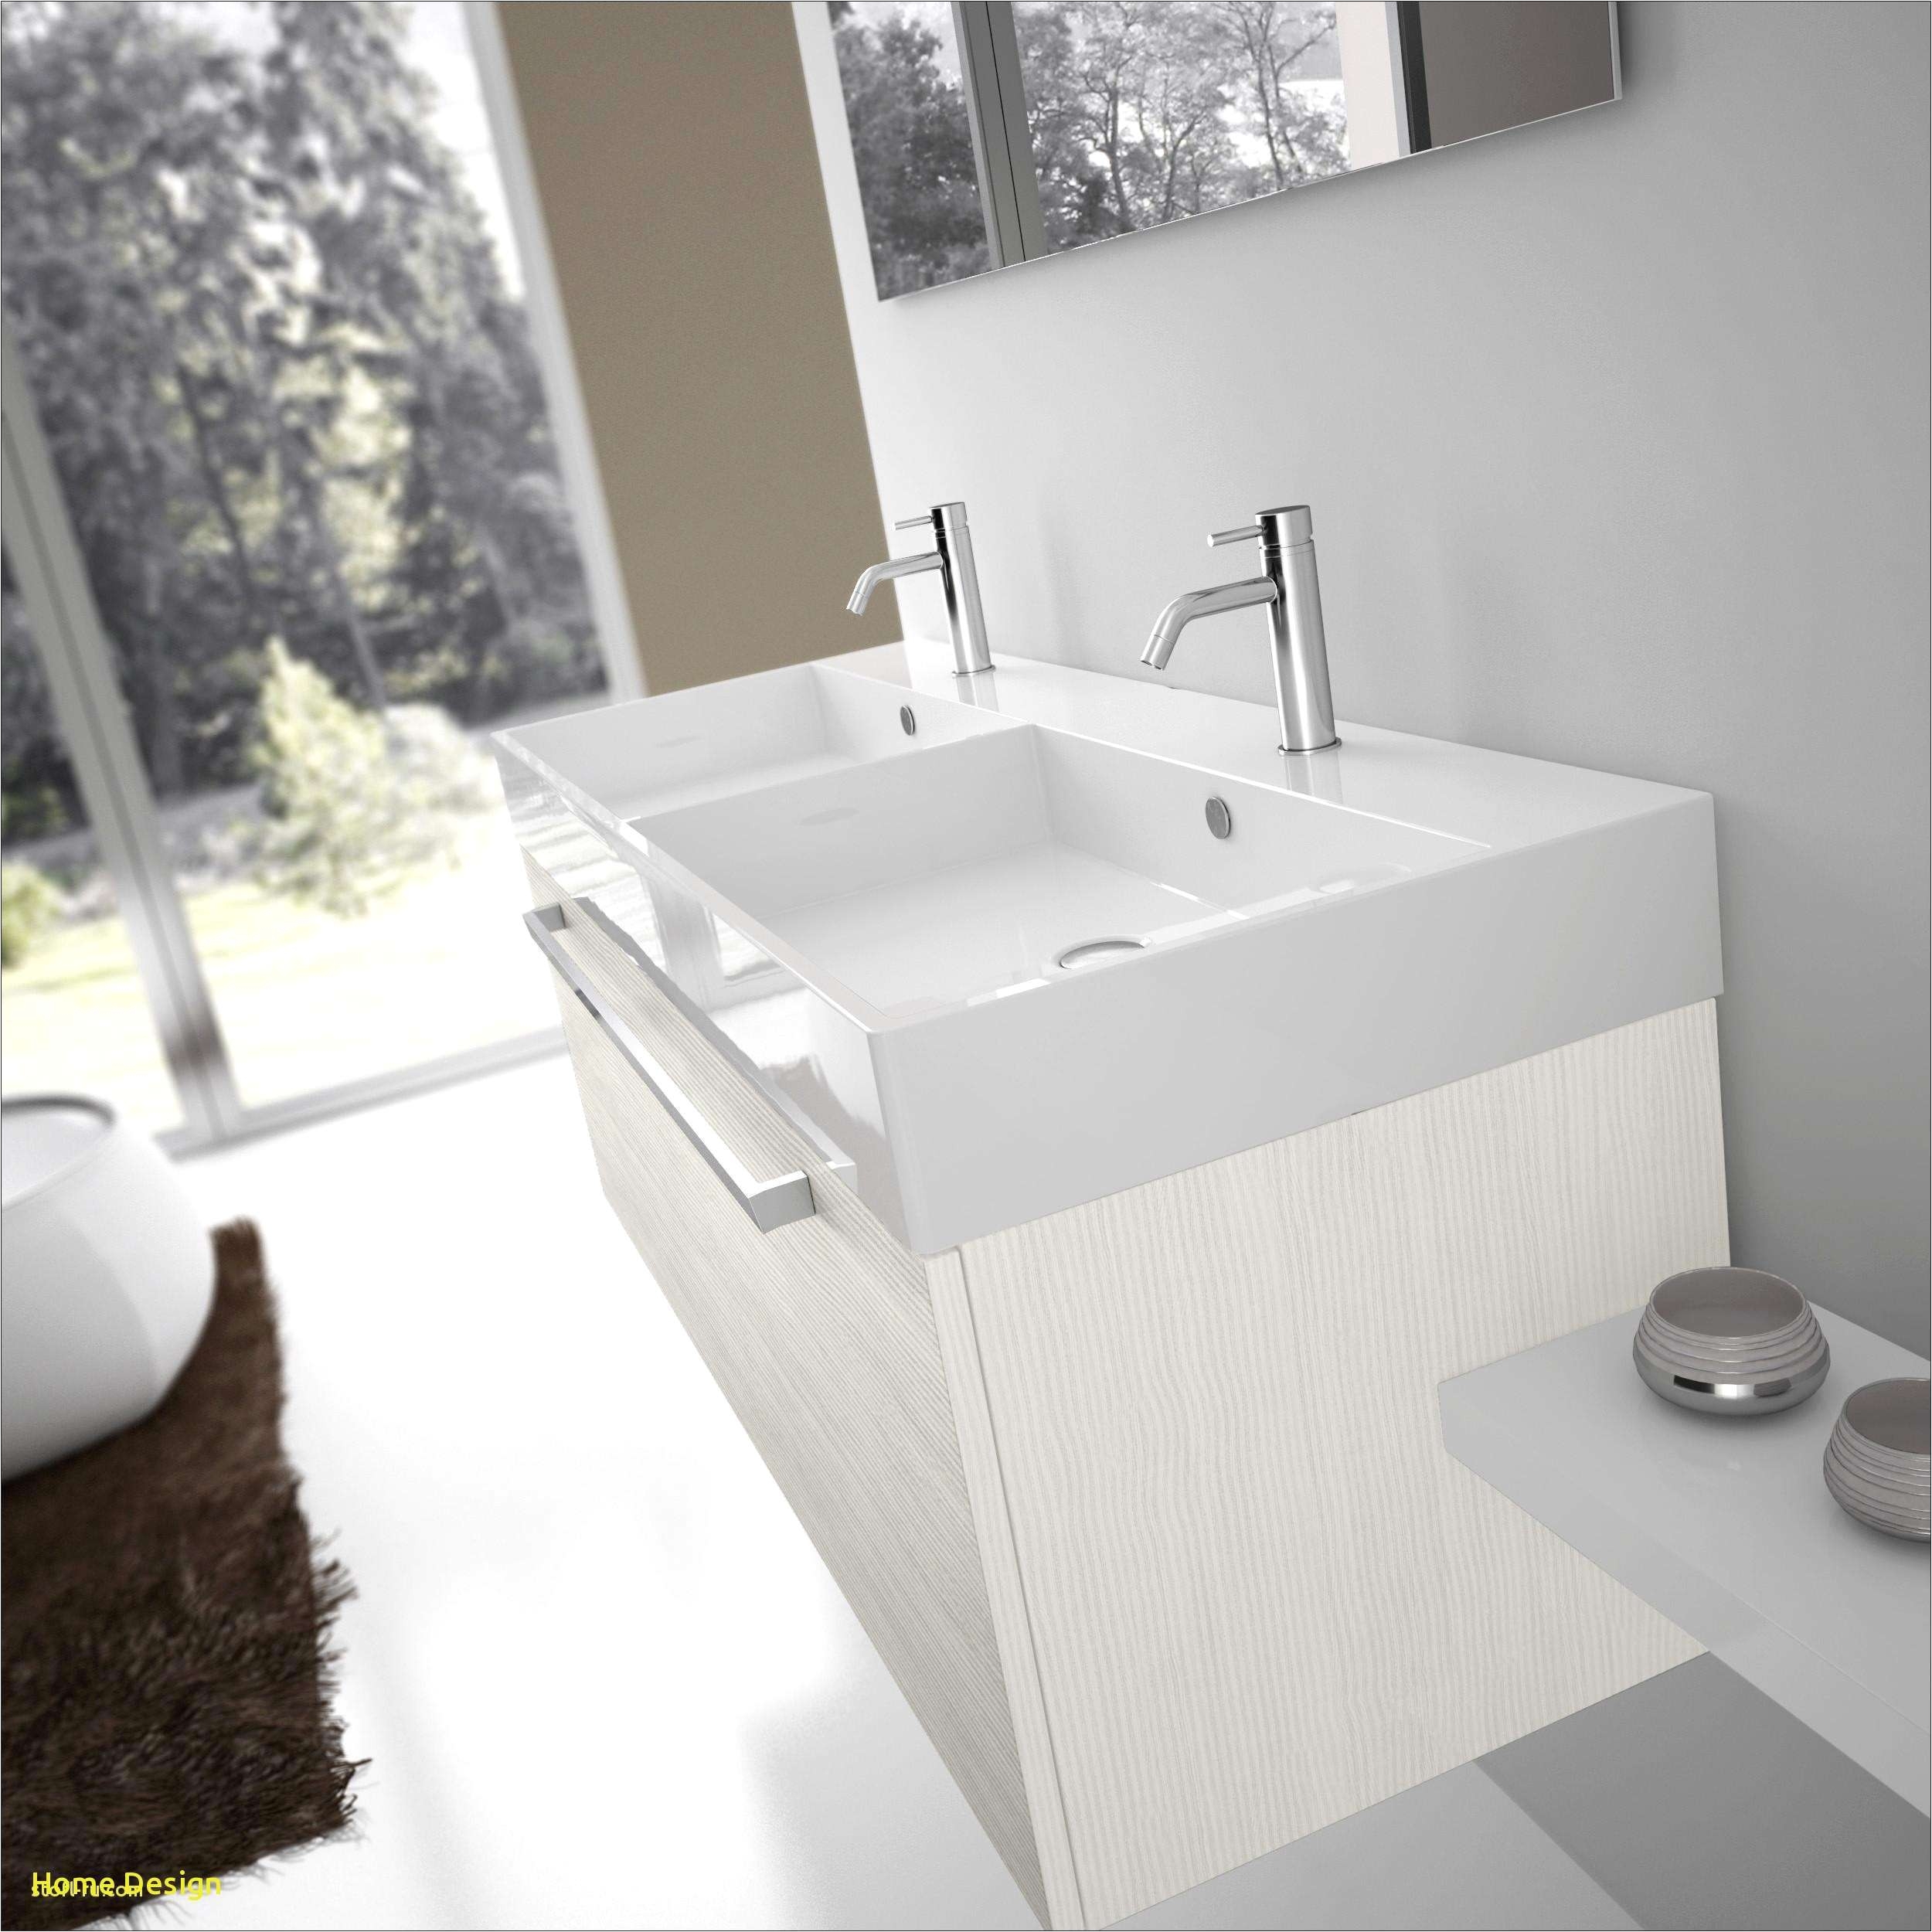 Chanel Bathroom Ideas Delightful Unique Modern 1 2 Bathroom Design Home Design